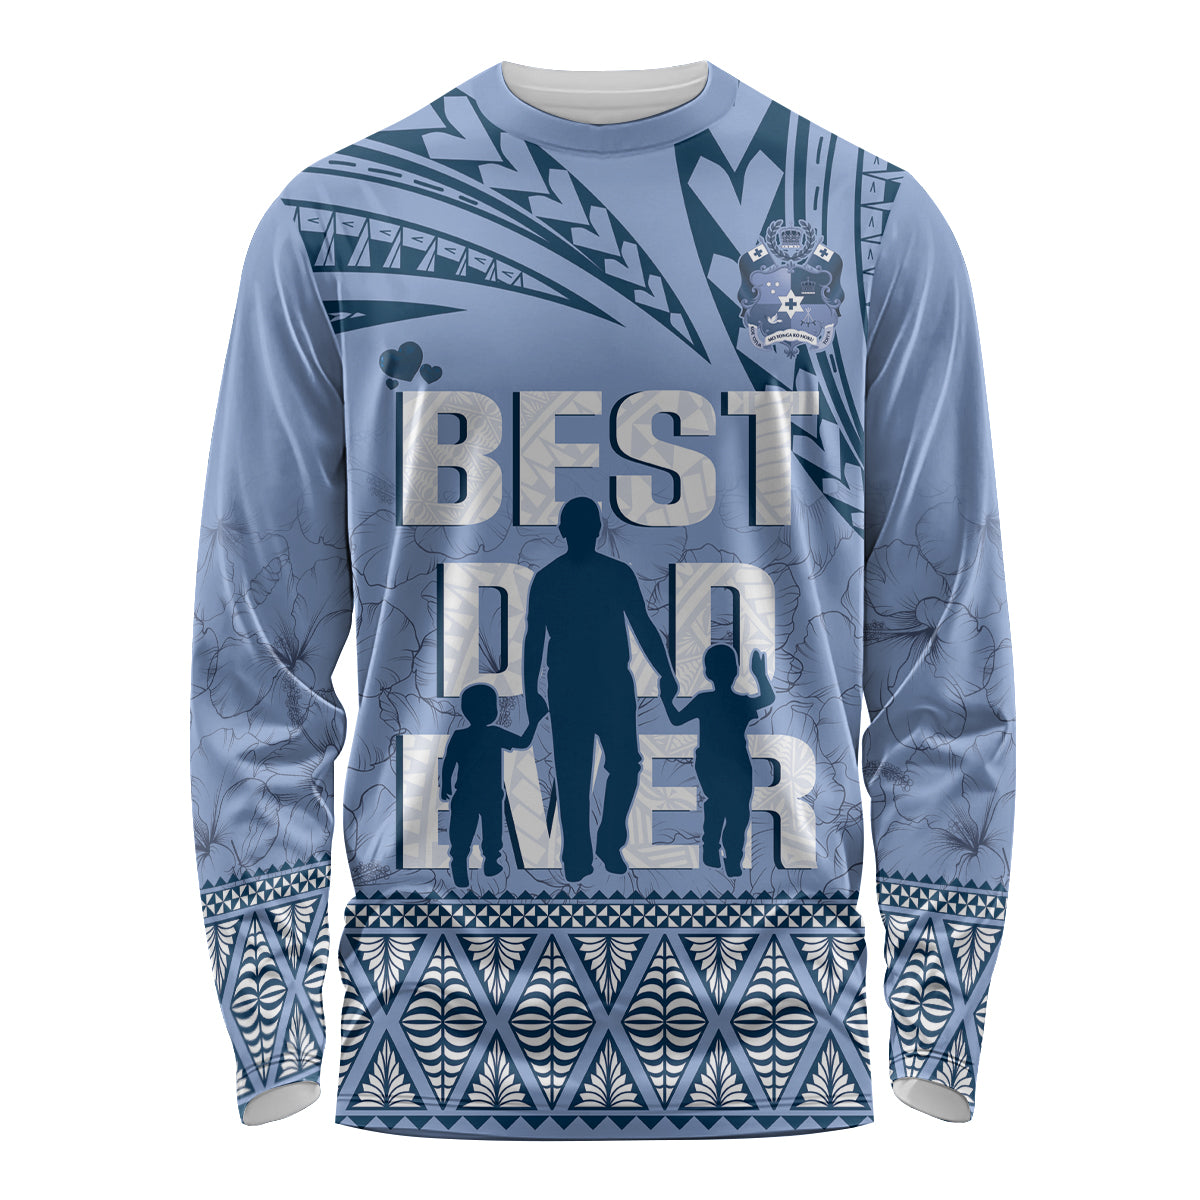 Tonga Father's Day Long Sleeve Shirt Best Dad Ever Tongan Ngatu Pattern - Blue